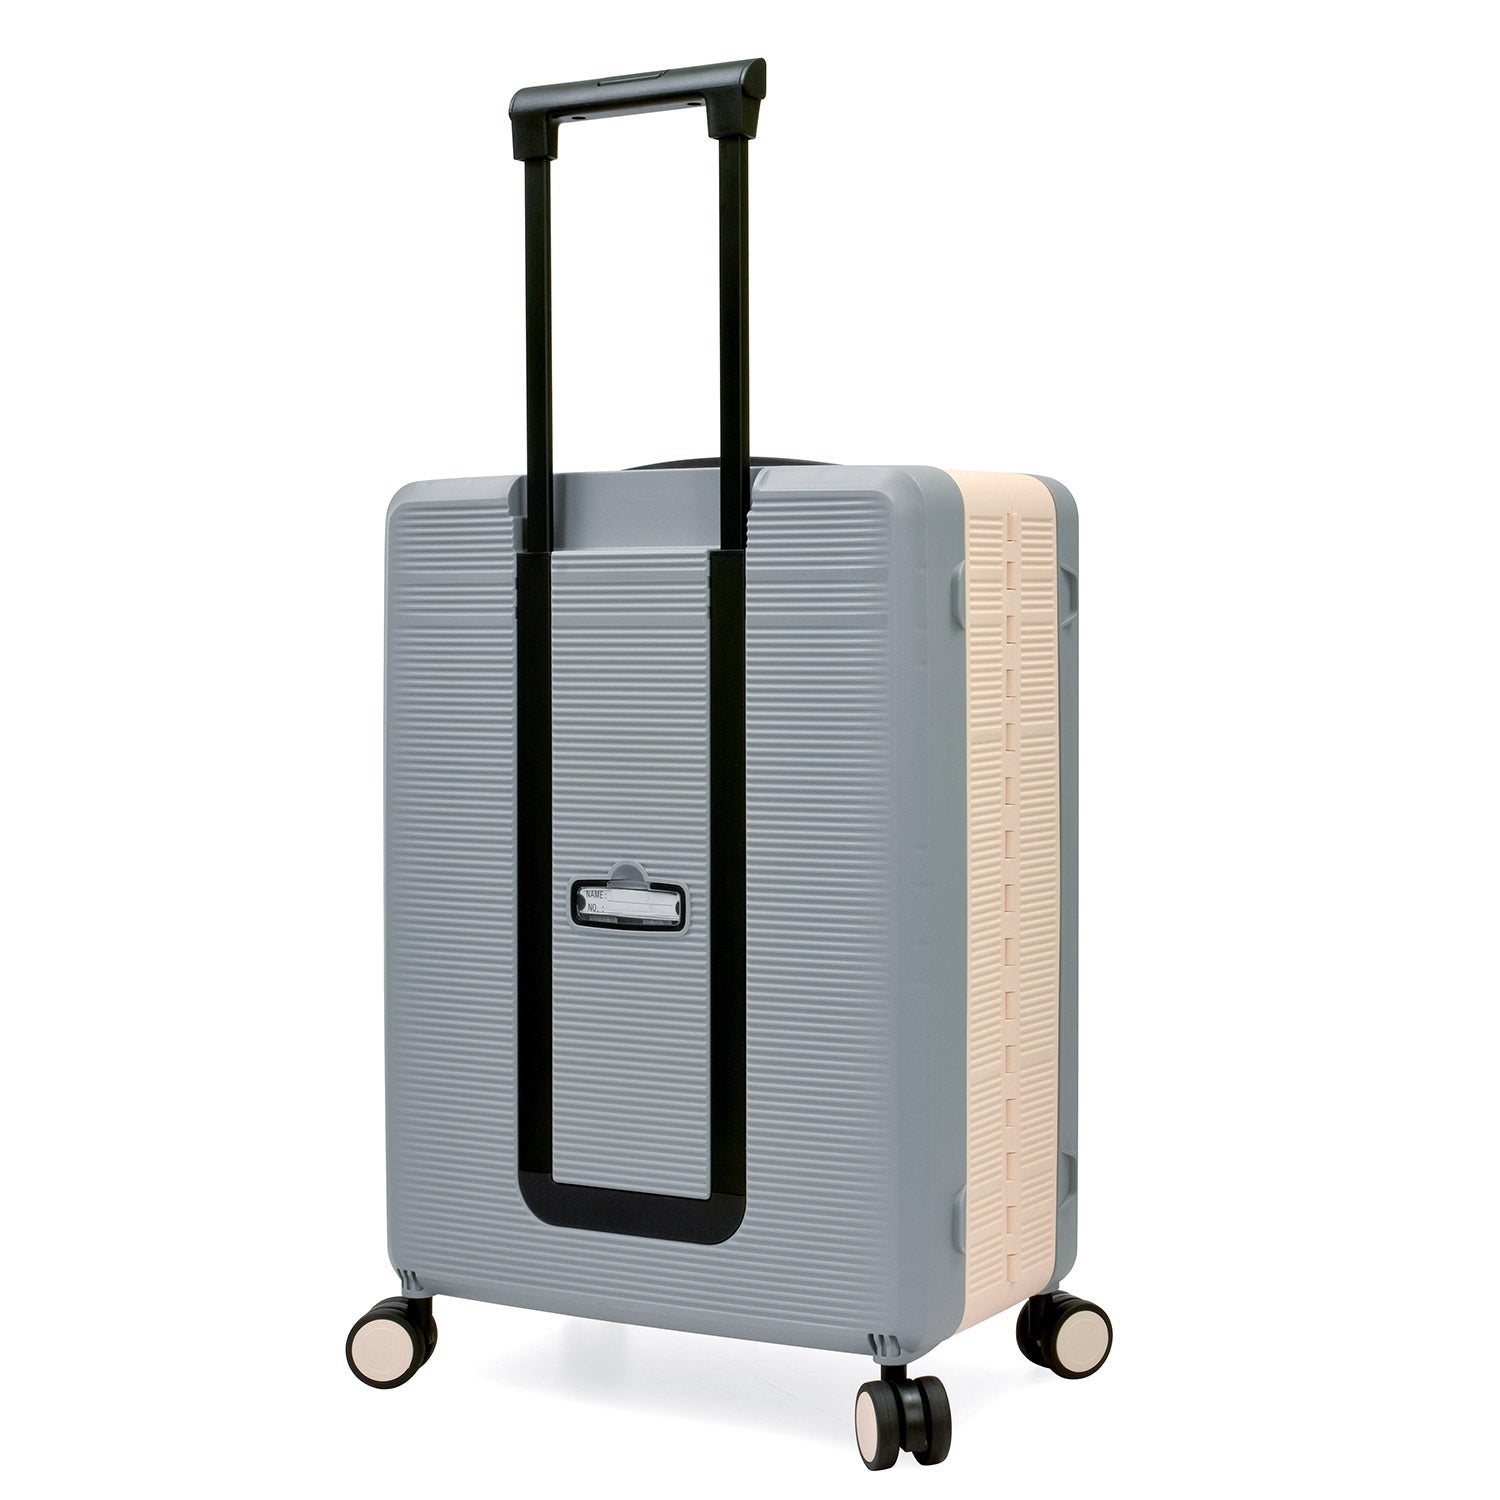 IKEA UPPTACKA Carry On Travel Luggage Collapsible | Travel luggage, Luggage,  Luggage bags